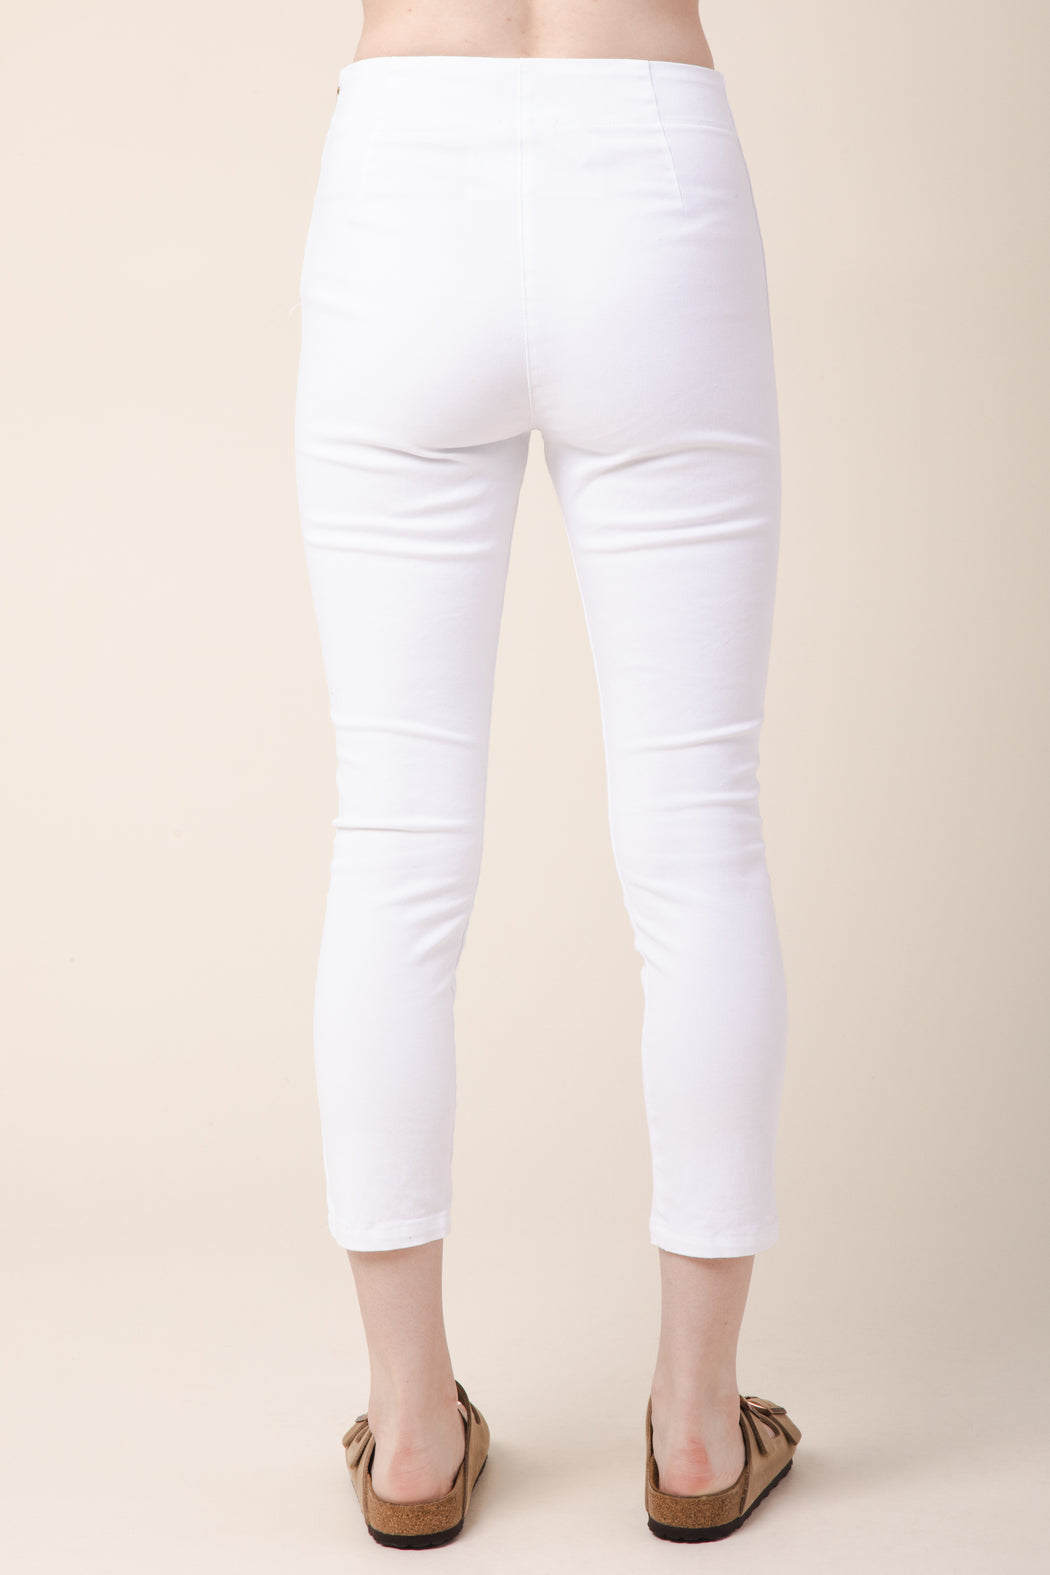 White Straight Pant,cigarette White Trousers, Formal Bottom